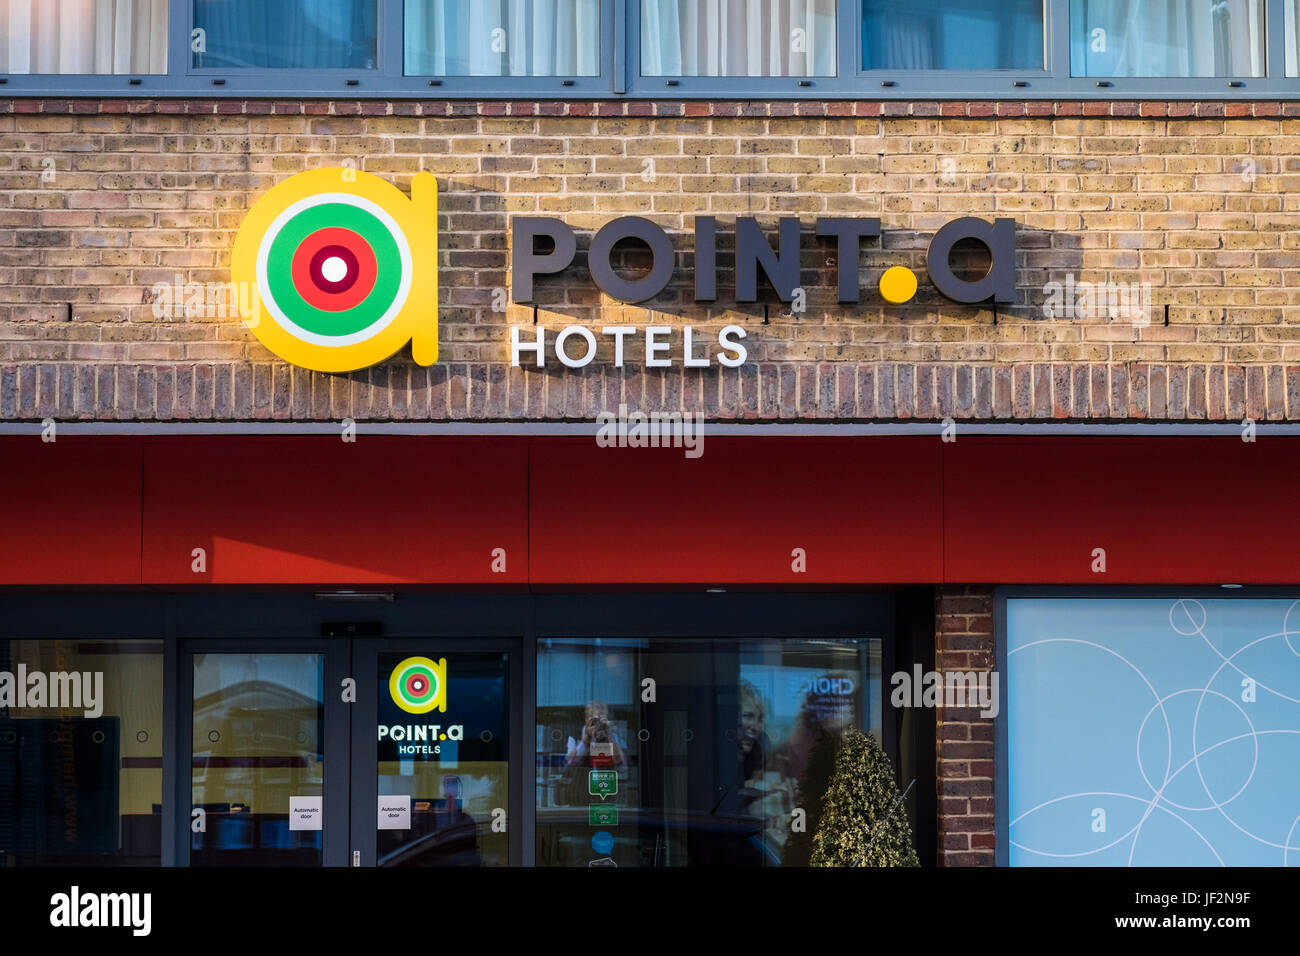 Point.a Hotel on Praed street Paddington, London, England,U.K. Stock Photo